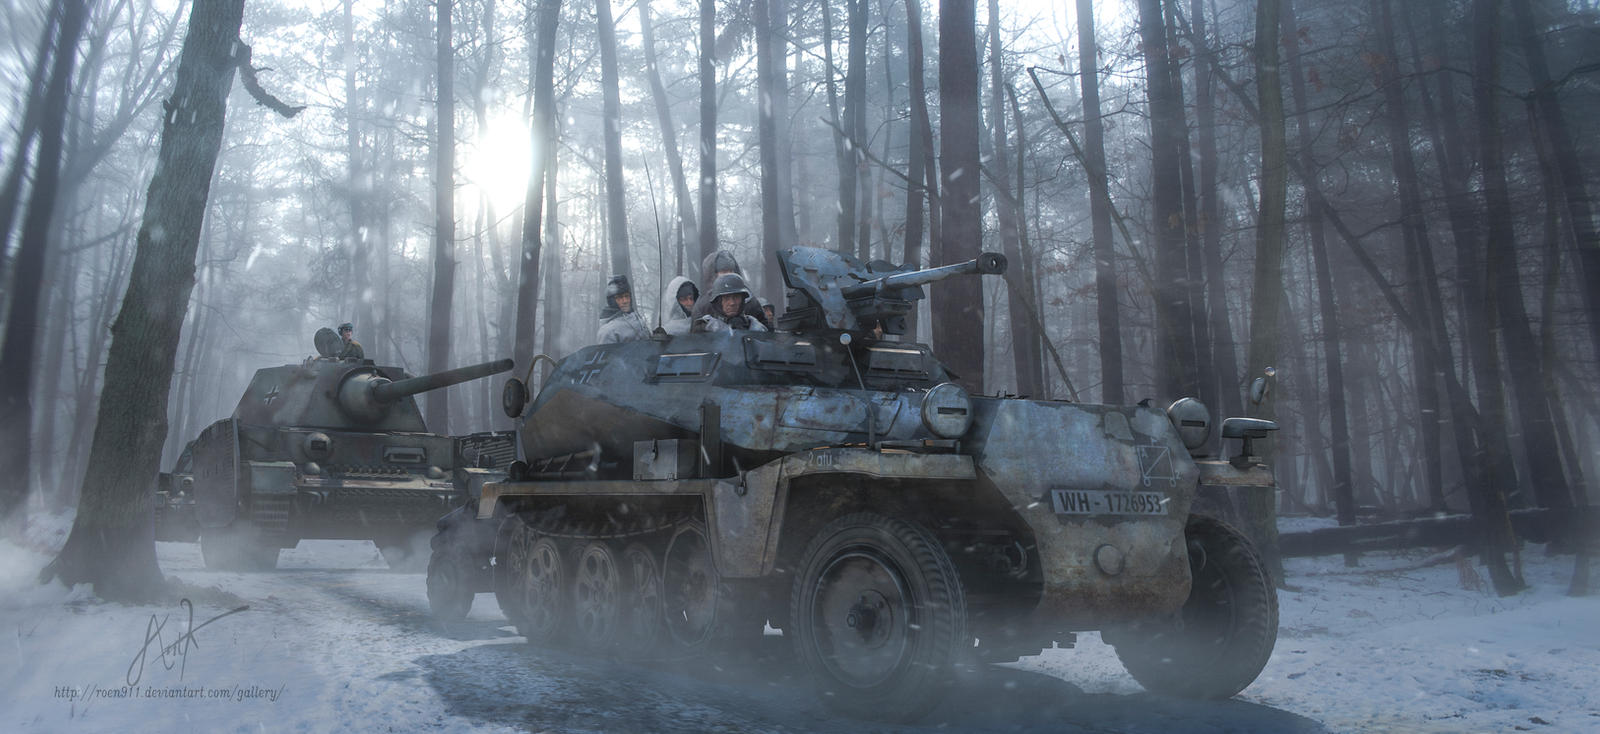 Eastern Front : Frozen Hell